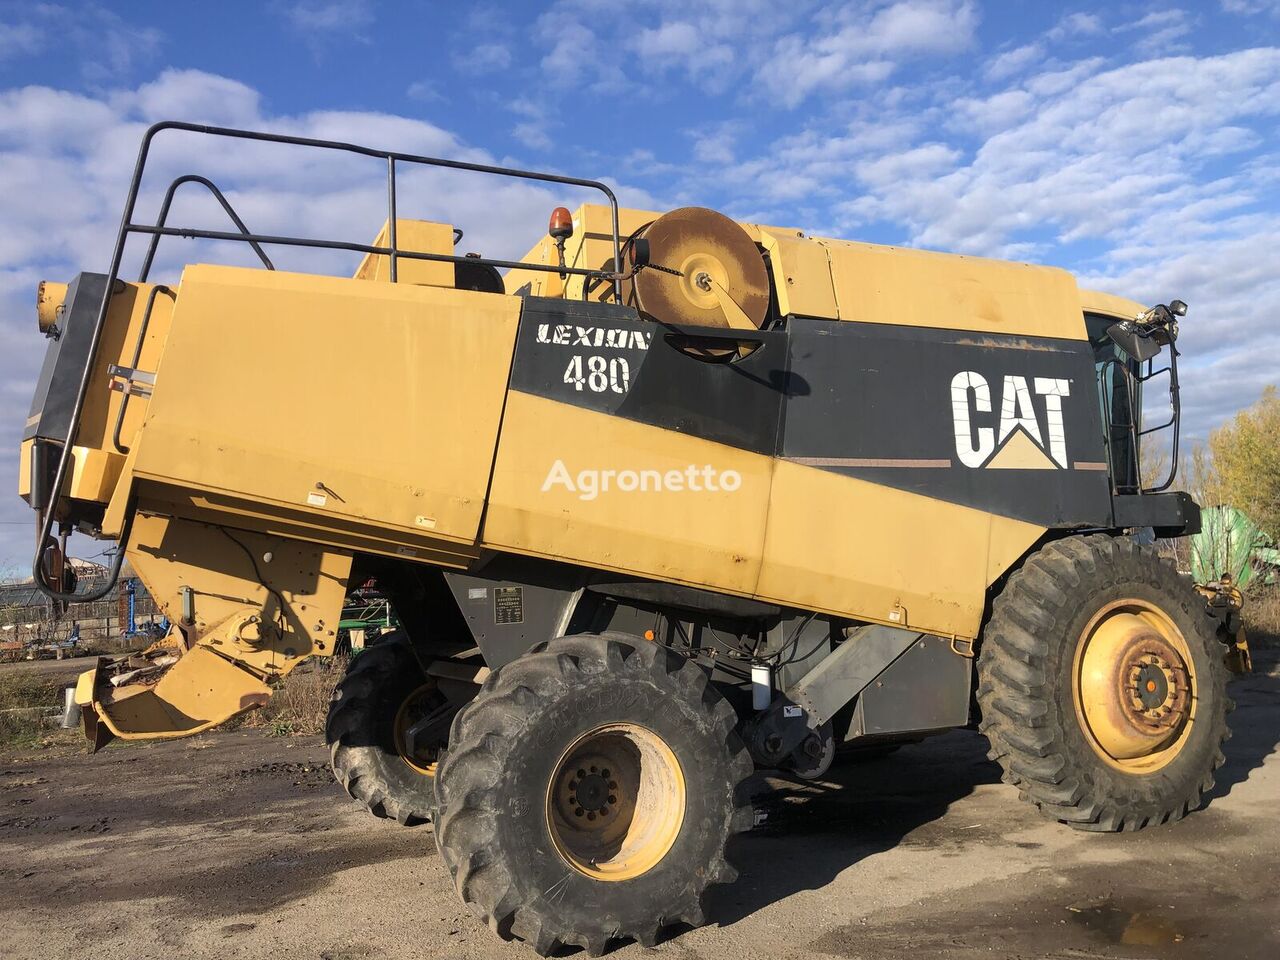 CAT CLAAS LEXION 480 grain harvester